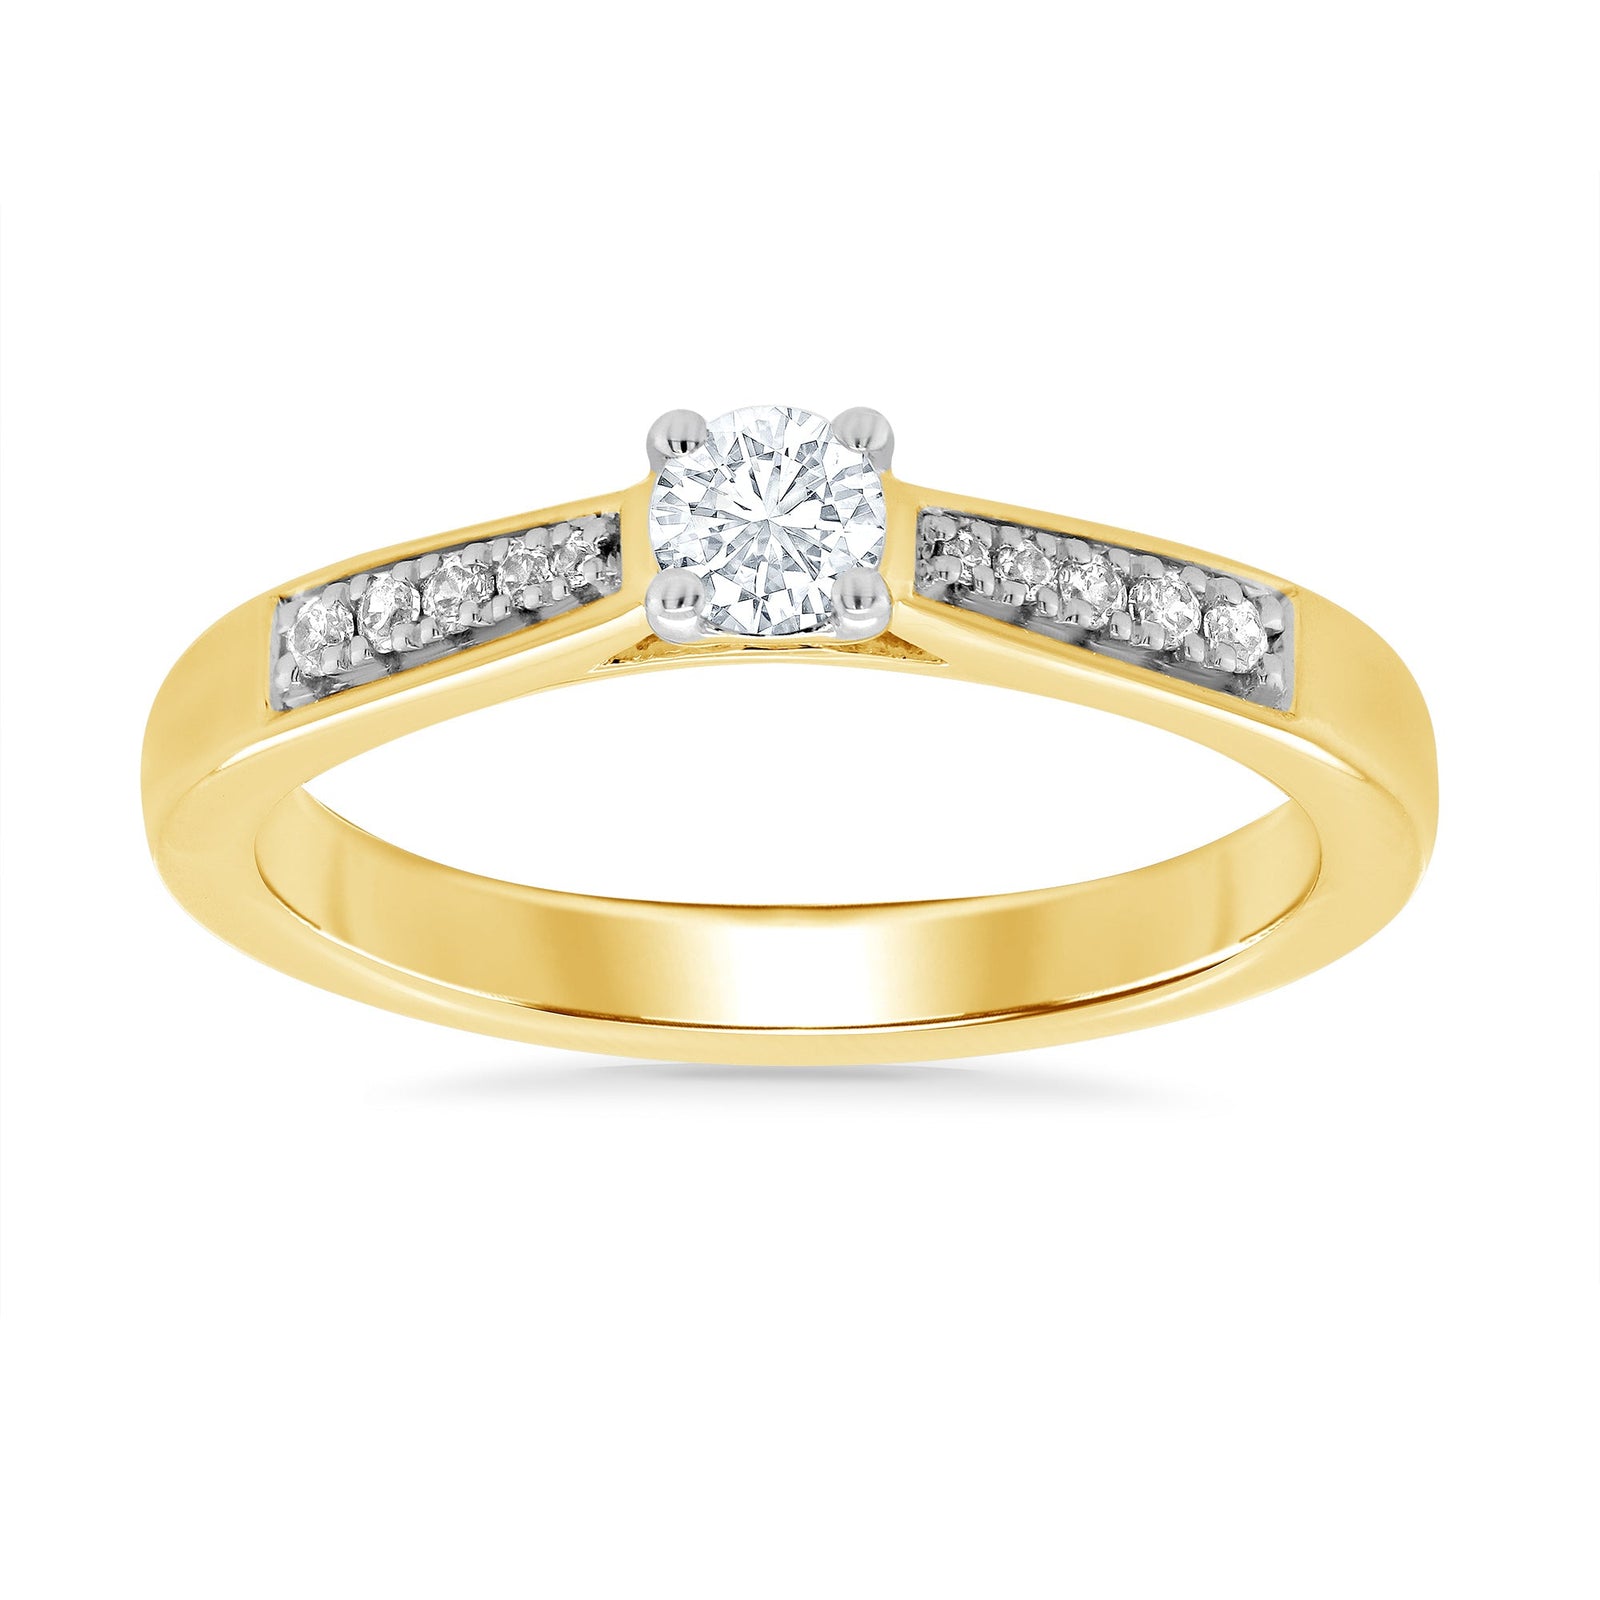 9ct gold single stone diamond ring with diamond set shoulders 0.33ct